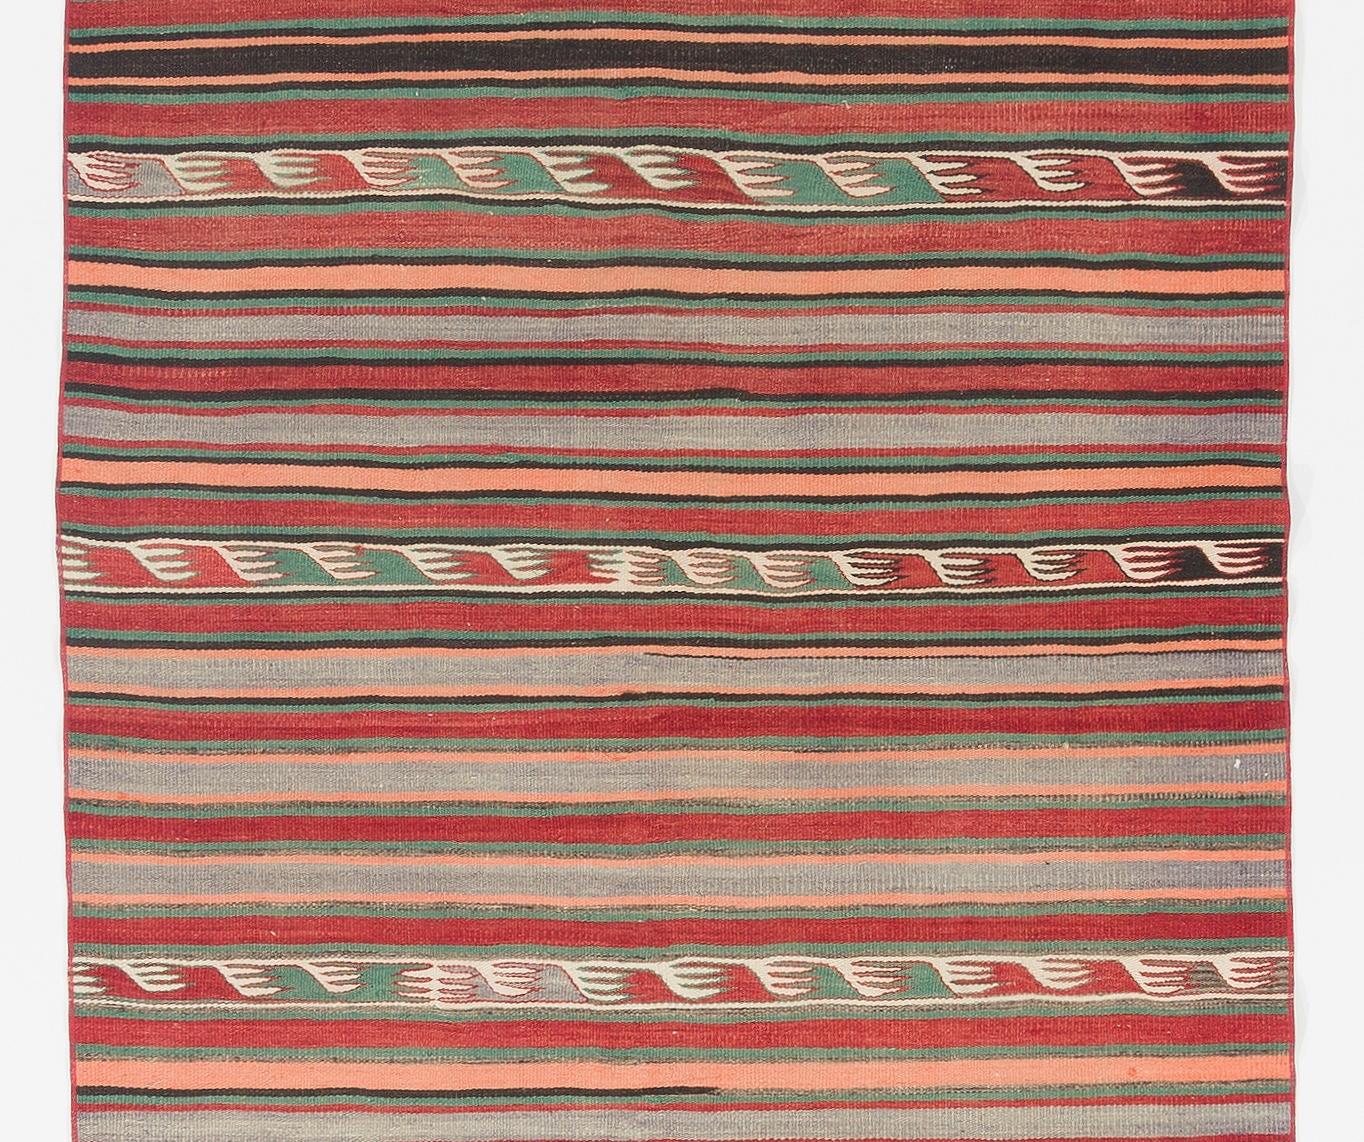 Hand-Woven 4.3x11.4 Ft Colorful Nomadic Kilim Rug, 100% Wool. Vintage Striped Runner Carpet For Sale